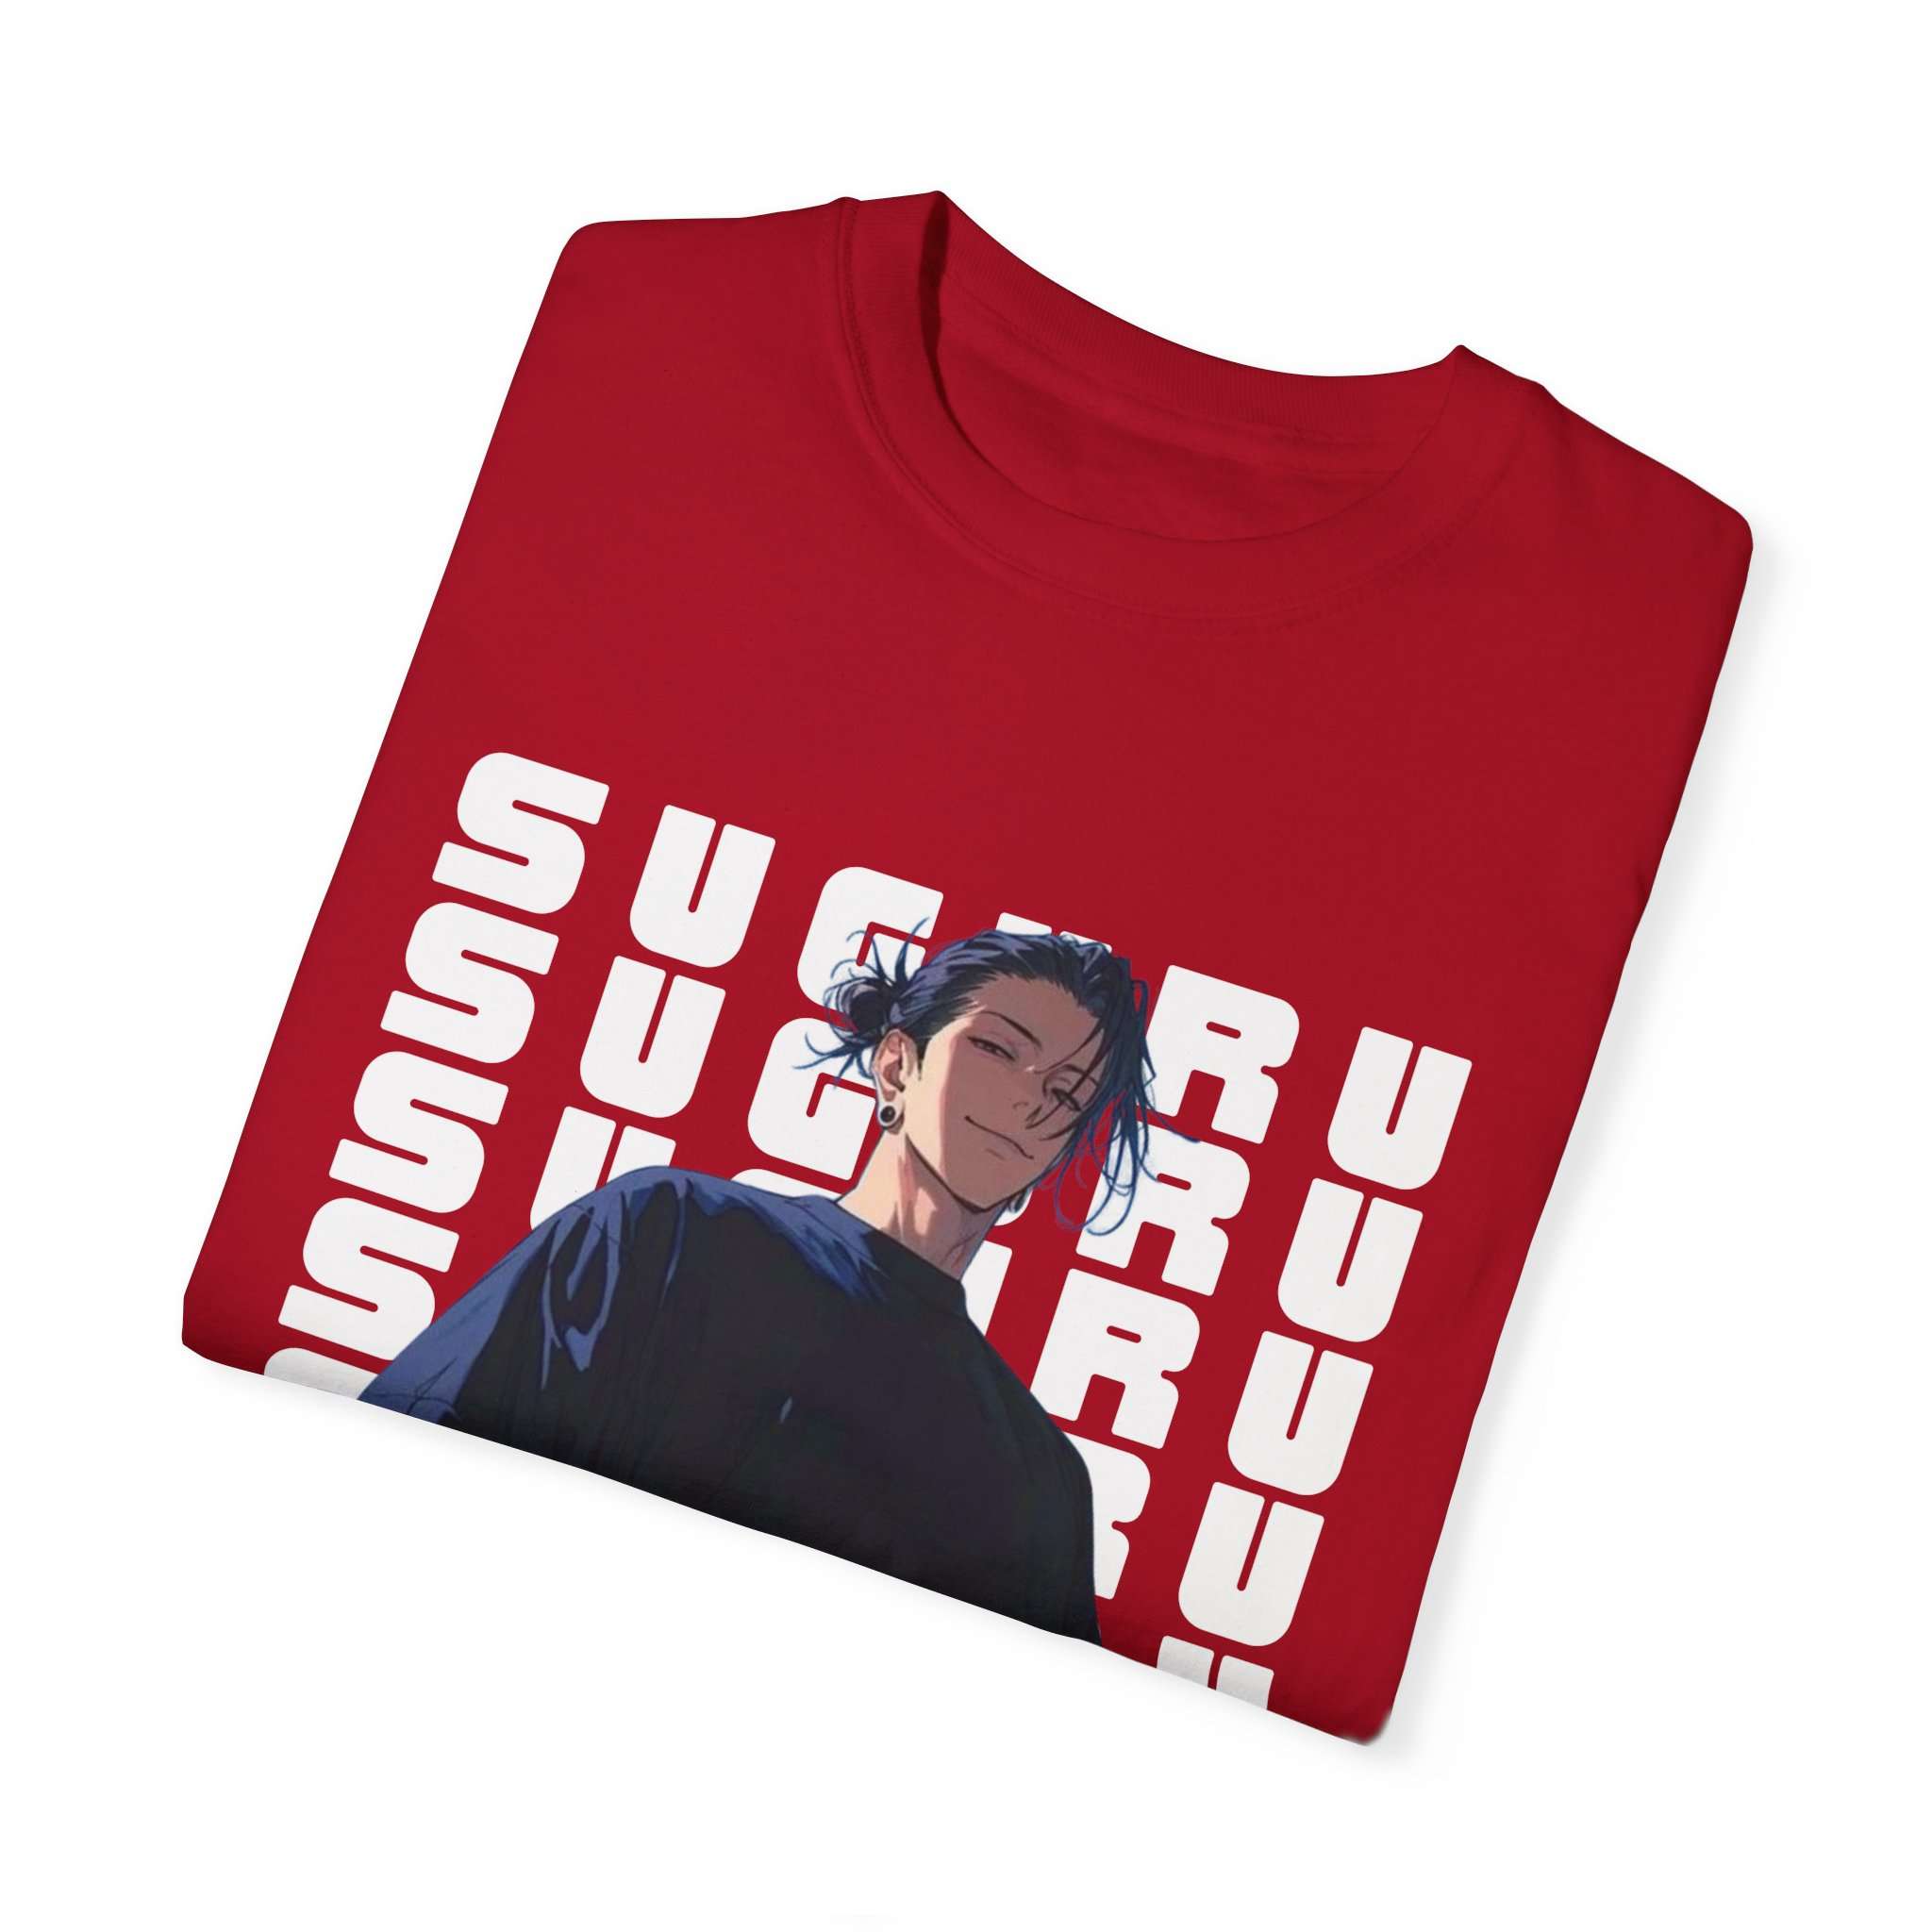 Suguru Geto Signature Design Unisex Garment-Dyed T-Shirt